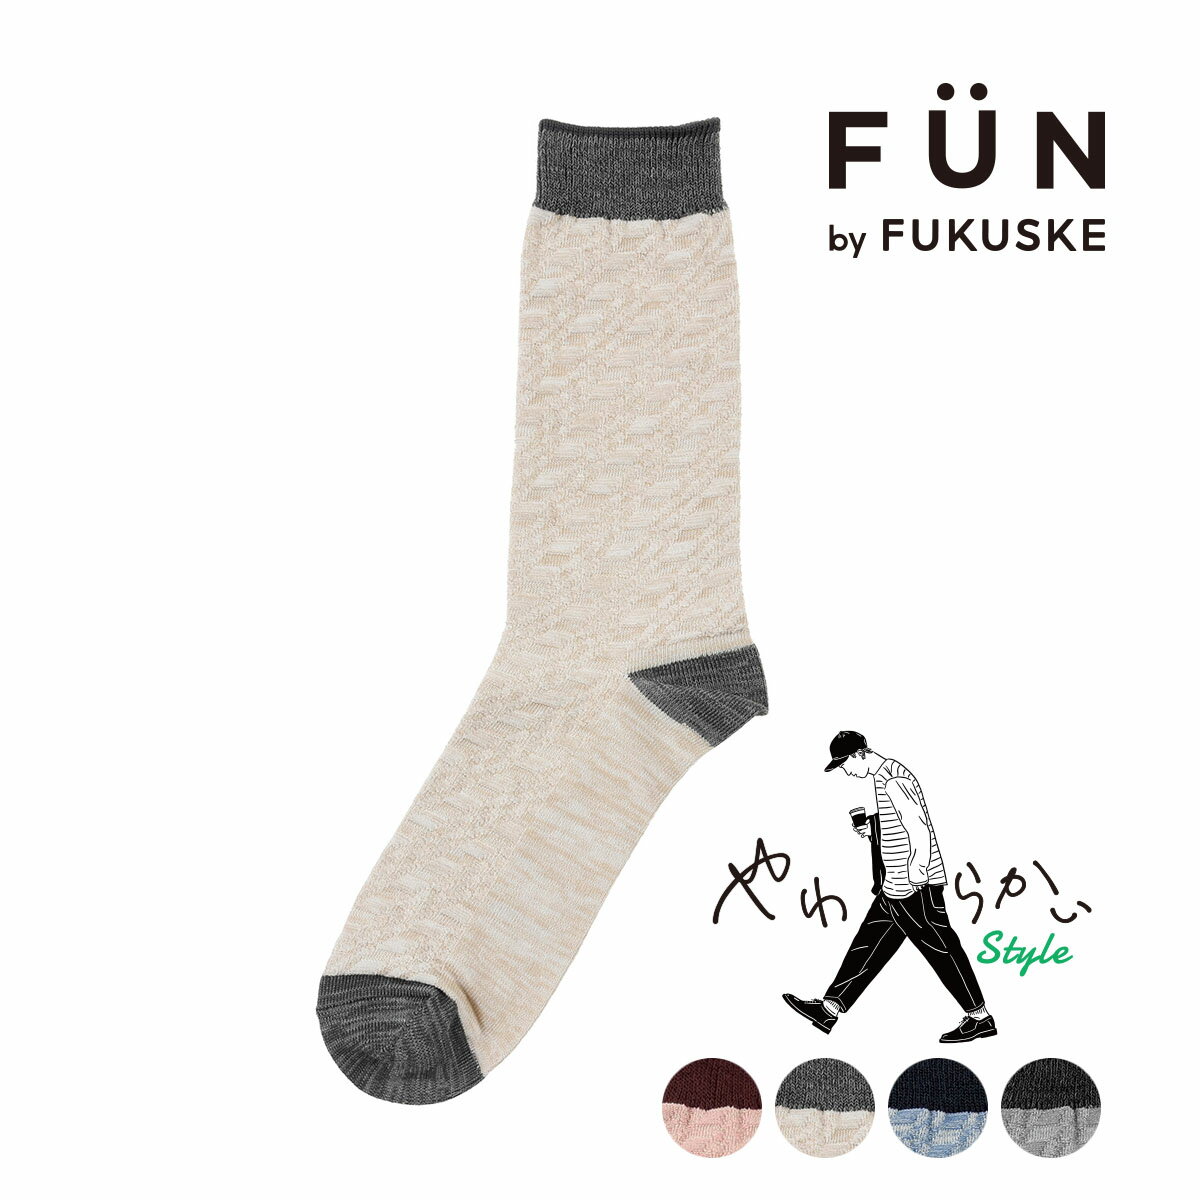 fukuske FUN(フクスケファン) ： やわらかいStyle リンクス ソックス クルー丈 毛玉になりにくい(3FY07W) 紳士 男性 メンズ 靴下 フクスケ fukuske 福助 公式